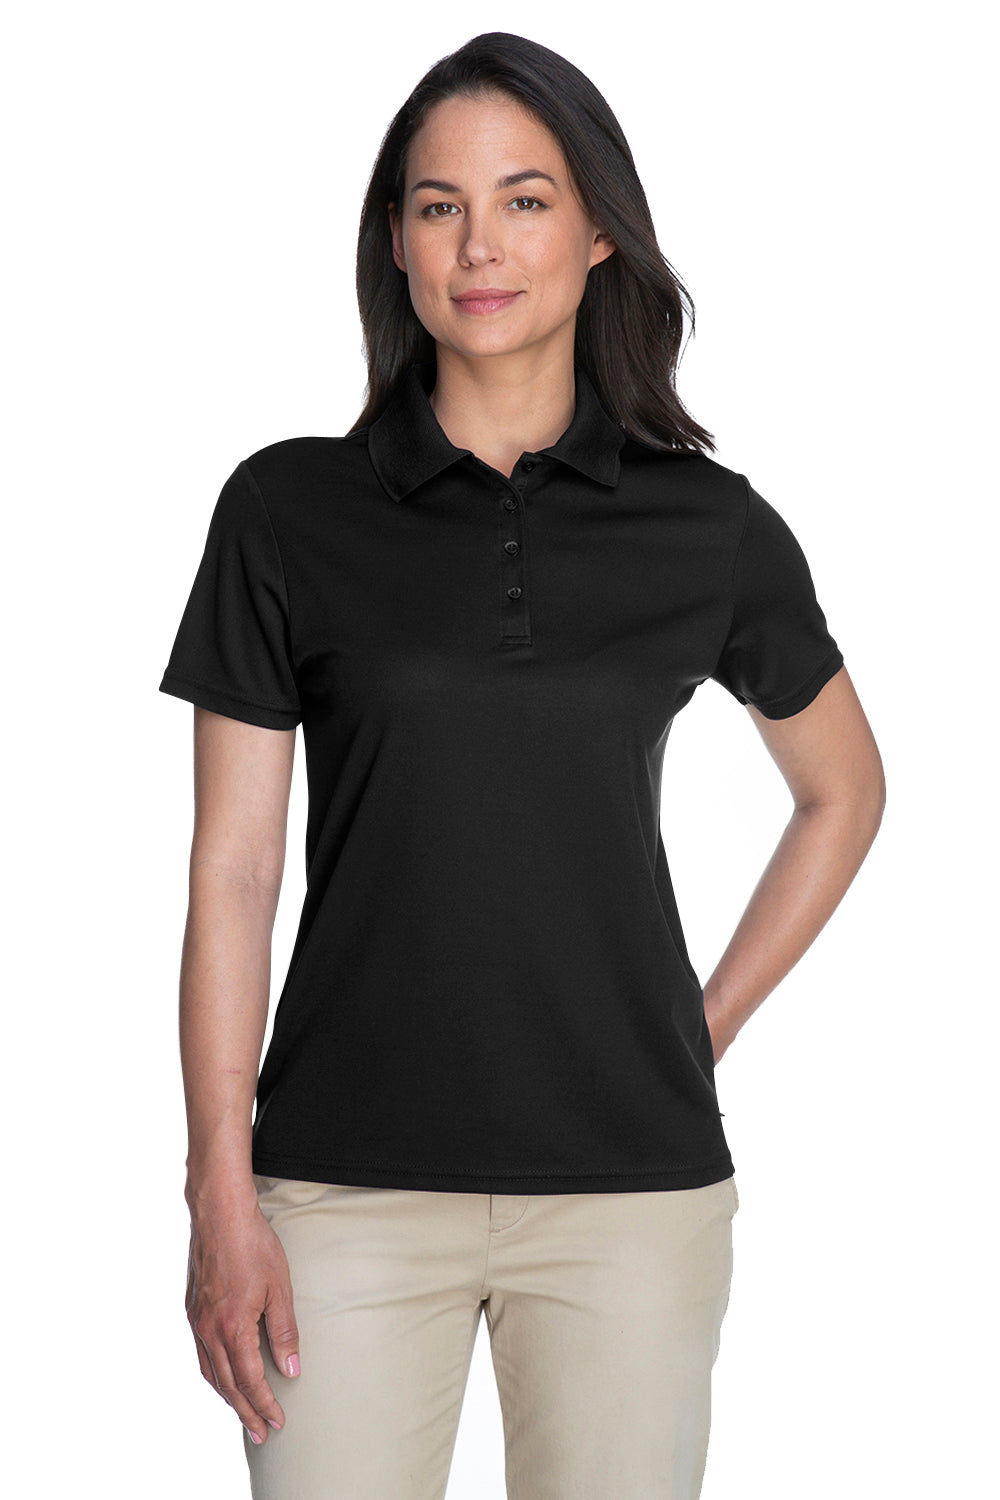 Core 365 78181 Womens Origin Performance Moisture Wicking Short Sleeve Polo Shirt Black Front